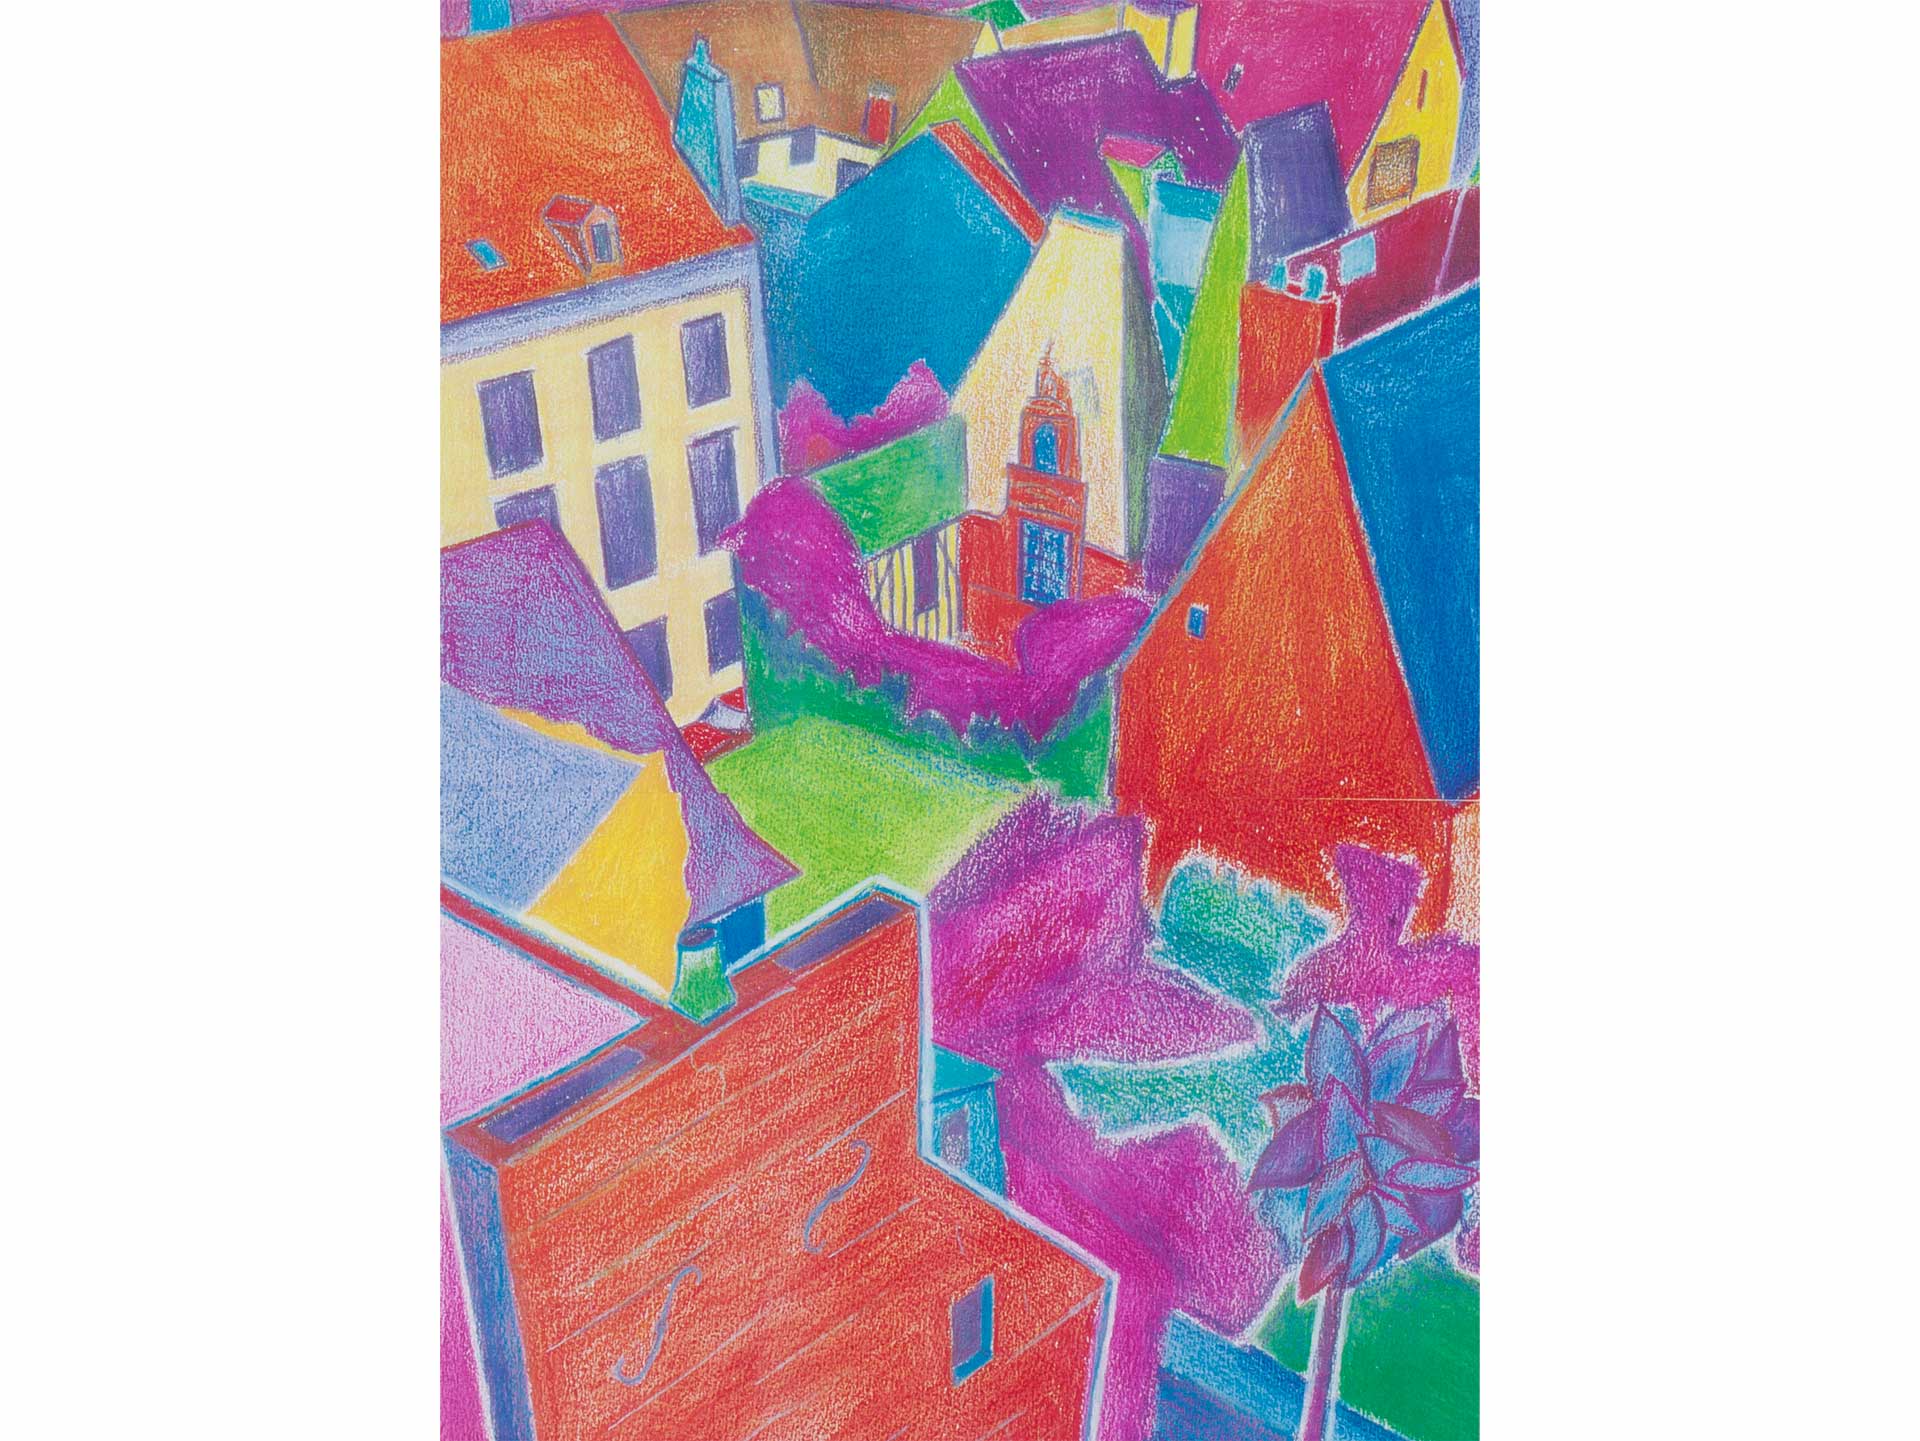 Lauren Avery Hutton | Loire Village, watercolor, 12x16, 2000